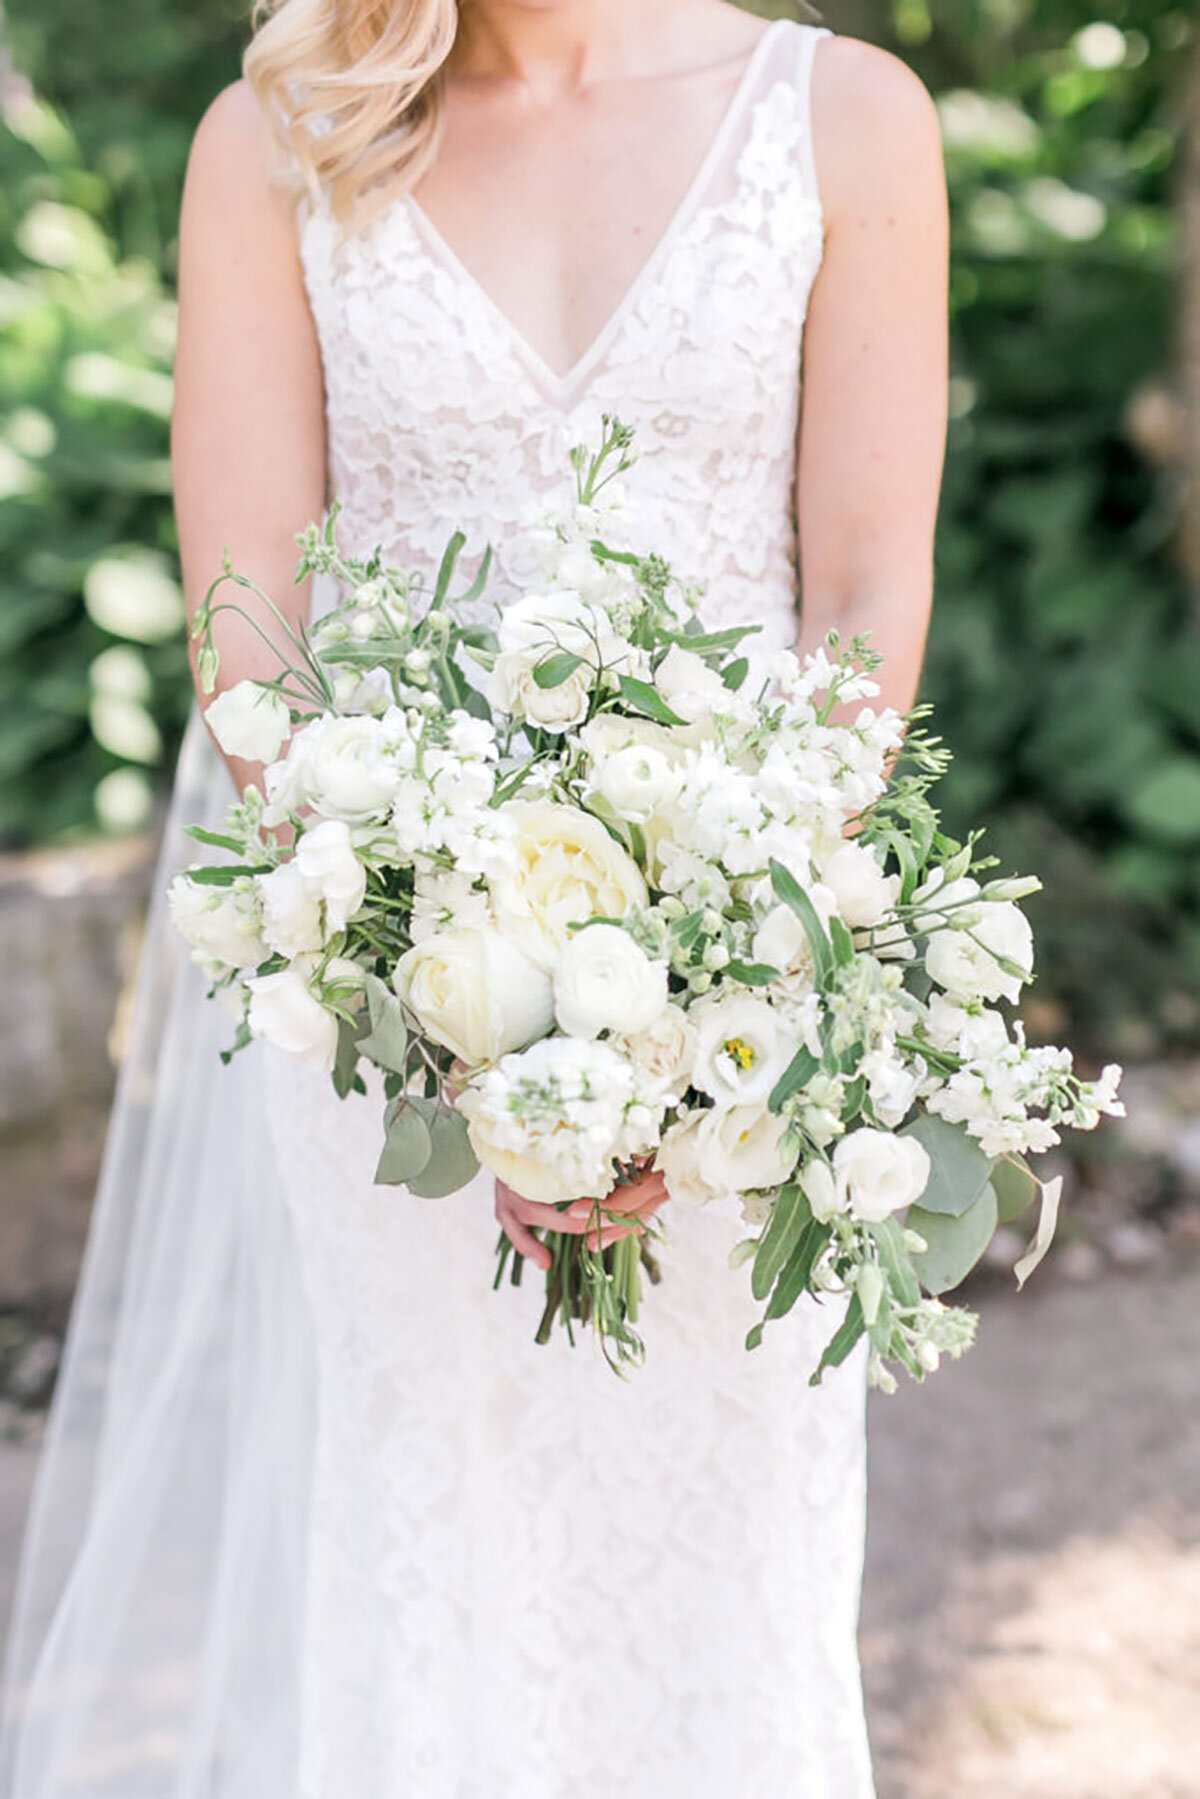 Sue-Gallo-Designs-Wedding-Florist-in-Southern-Ontario-Vineyard-Bride-The-Swish-List-0007.JPG